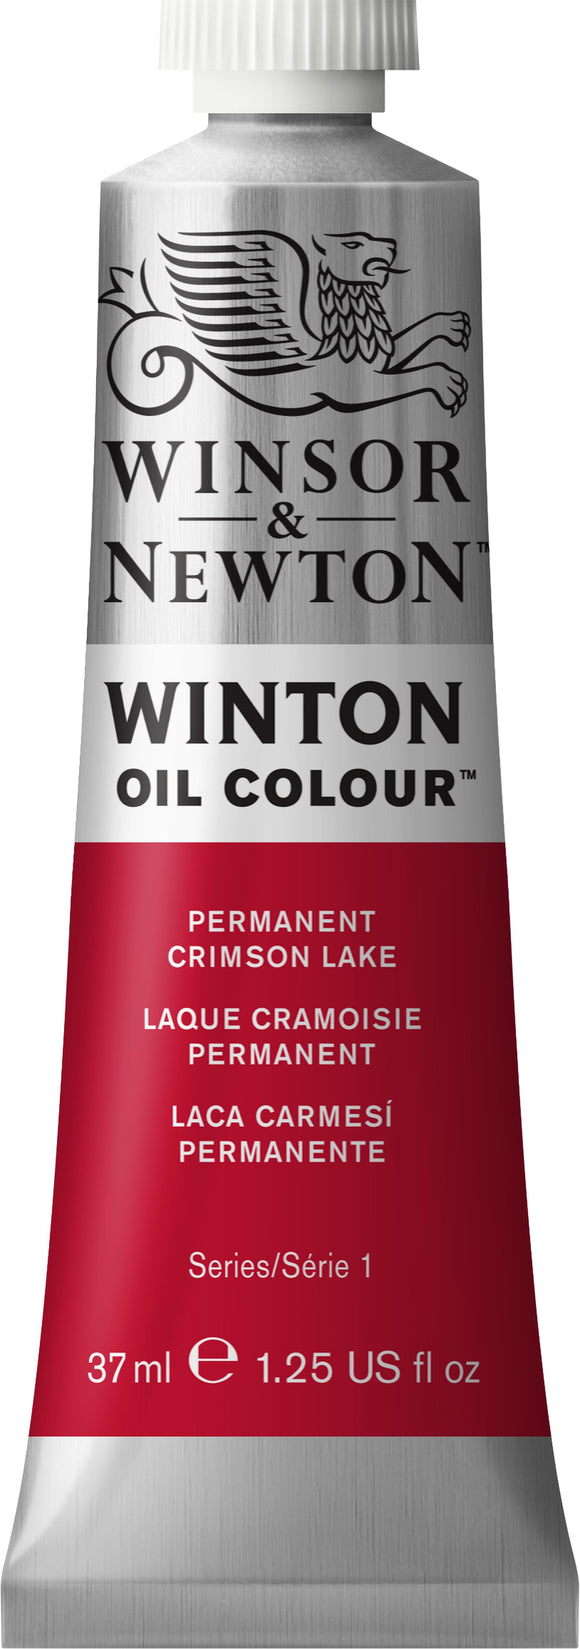 Winsor & Newton Winton Oil Colour Perm Crimson Lake 37Ml